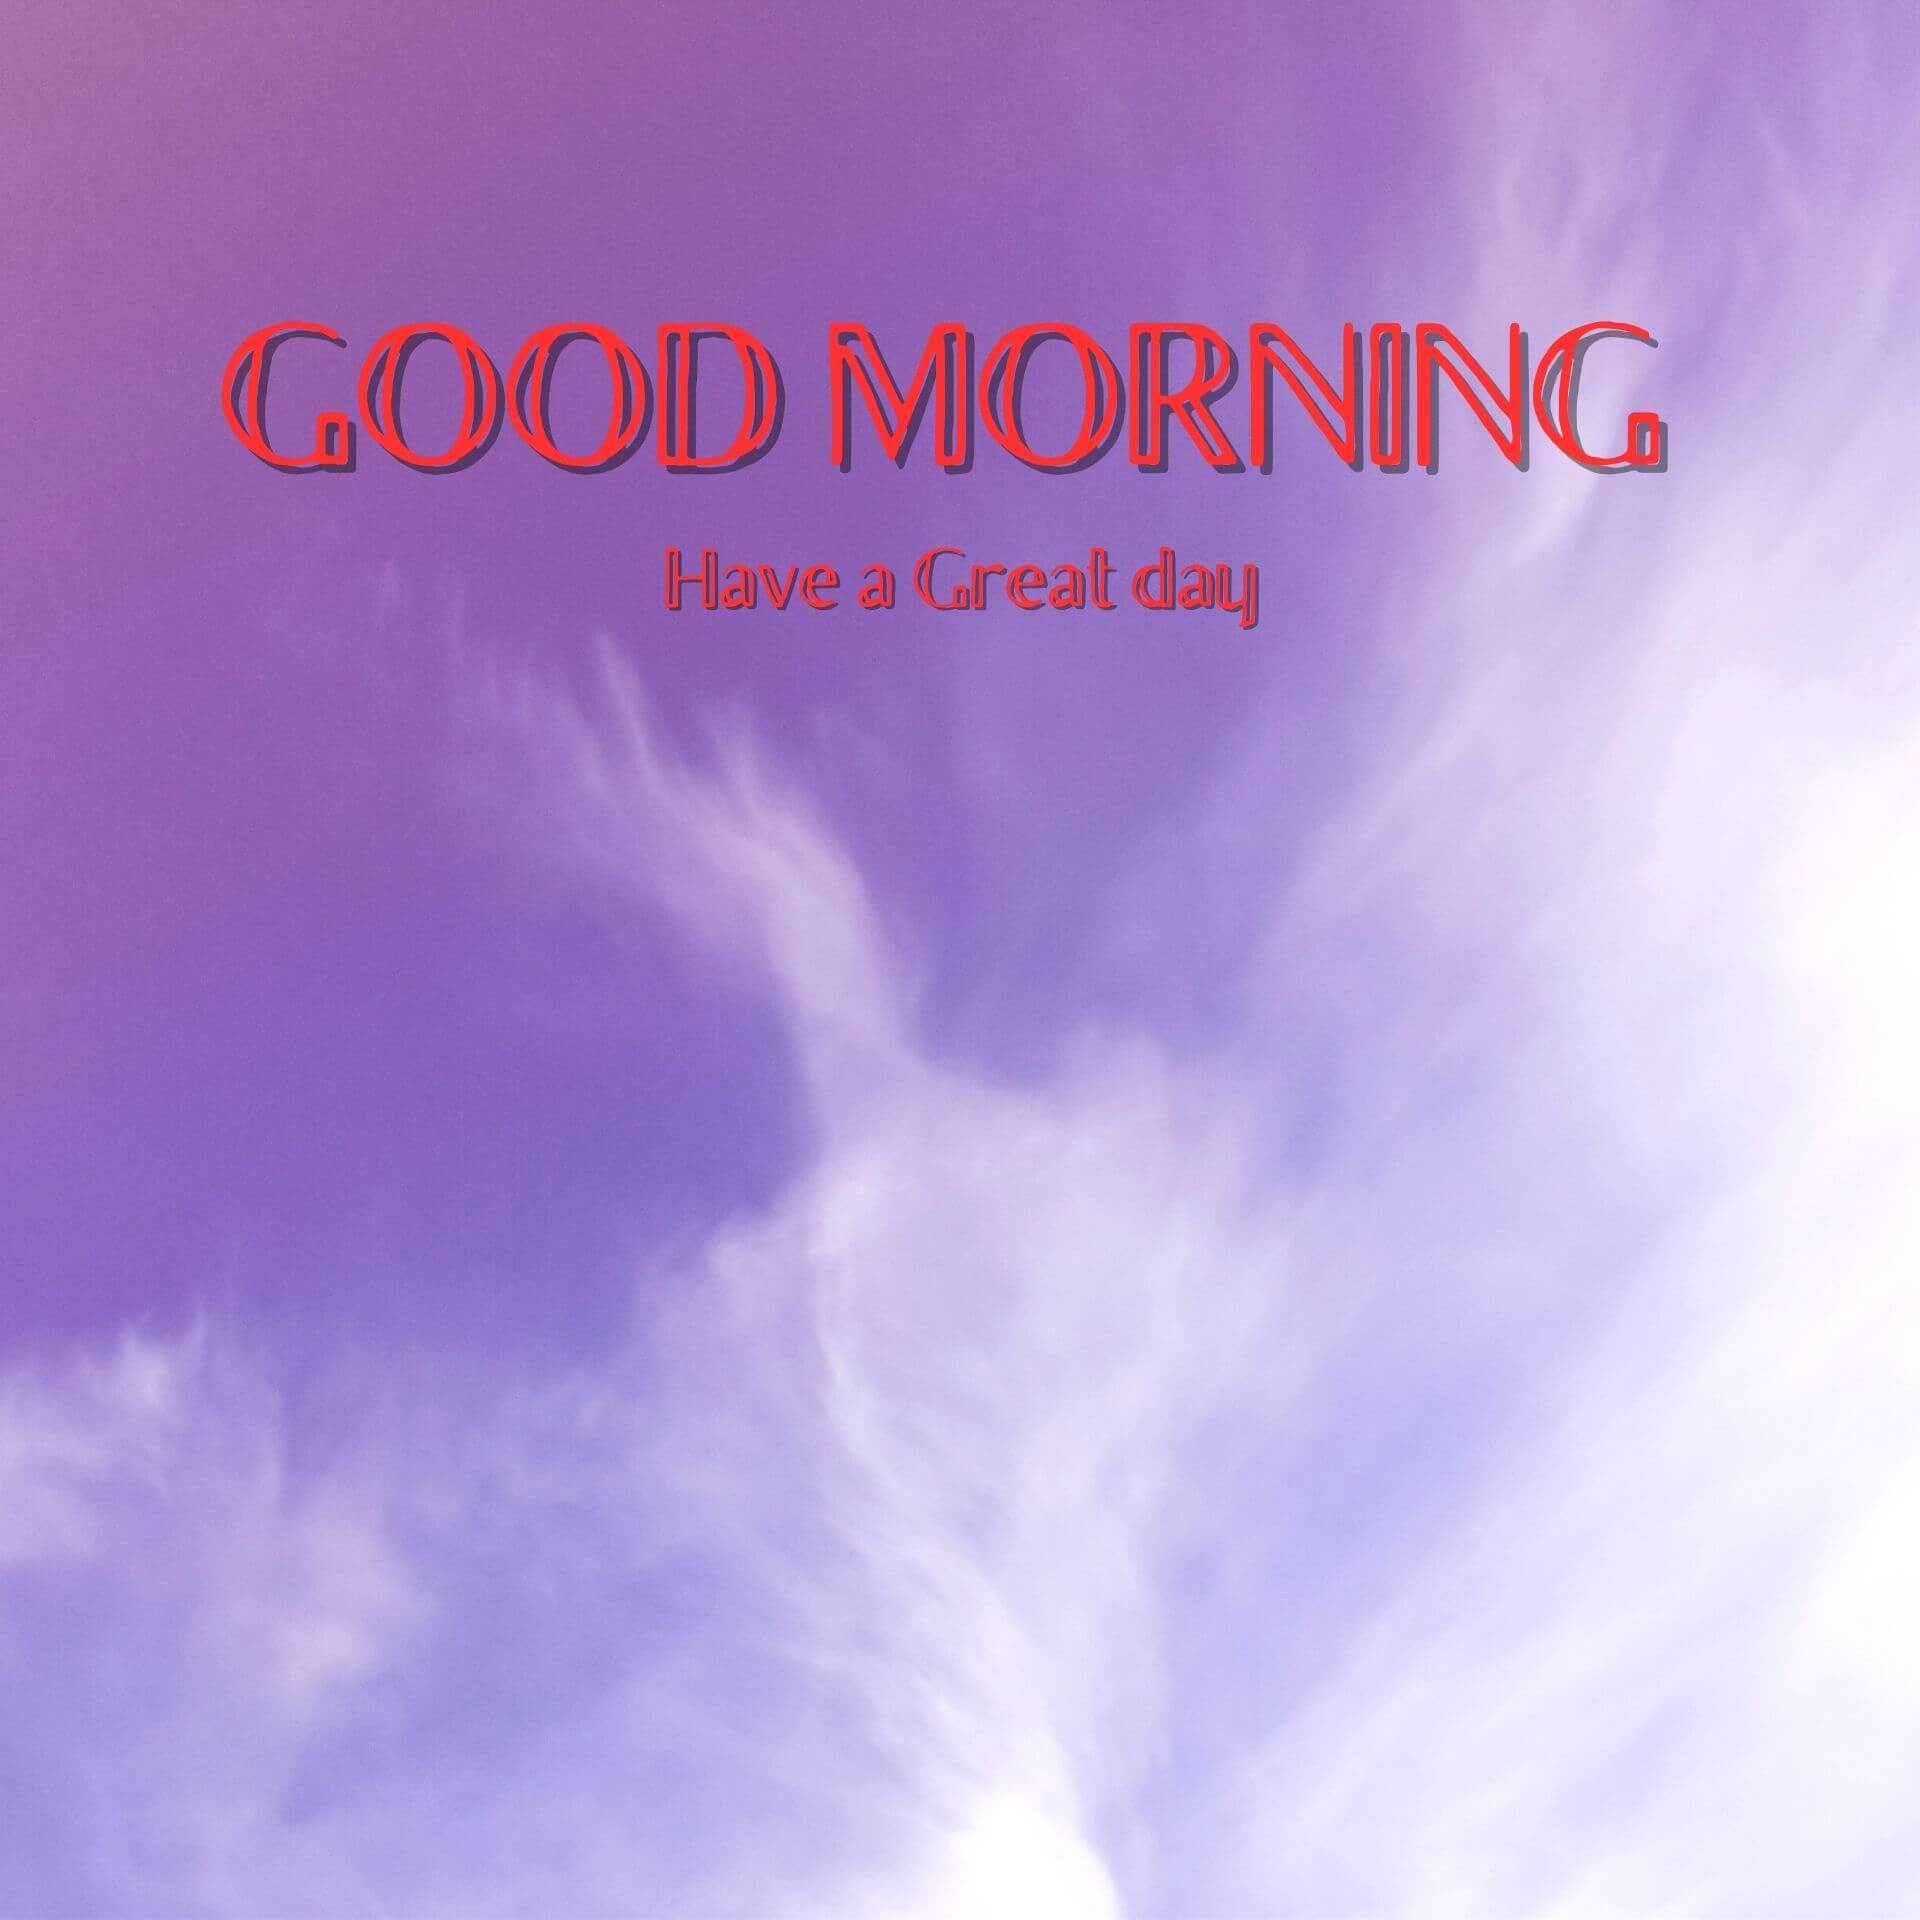 4k Ultra Good Morning Images Pics Free Download